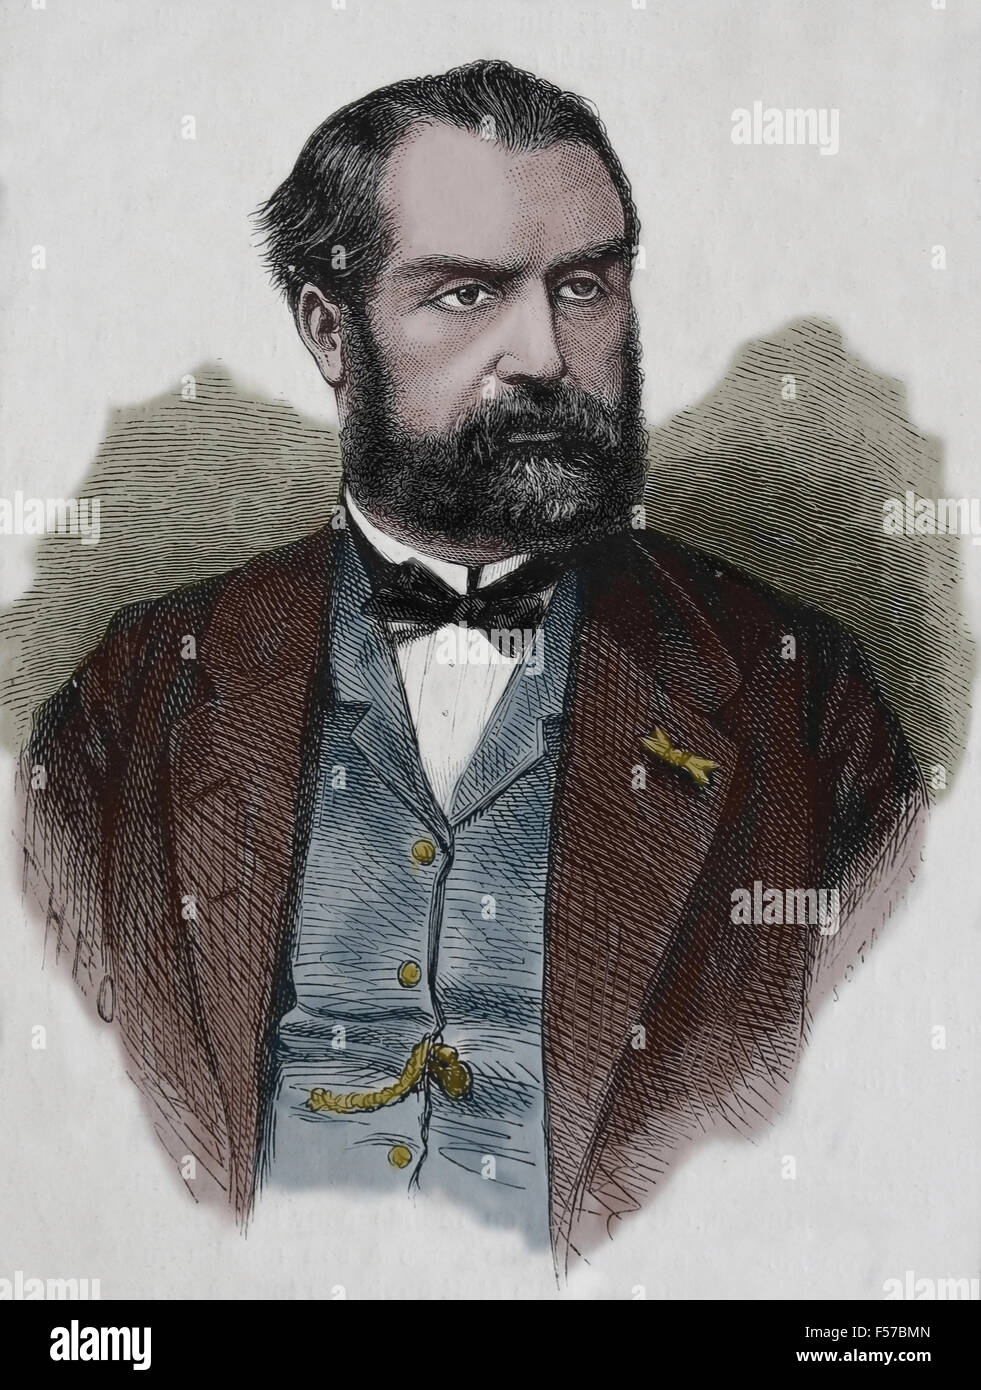 Olivier Halanzier (1819-1896), director of the Paris Opera 1871-1879. Portrait. Engraving. 19th century. Color. Stock Photo